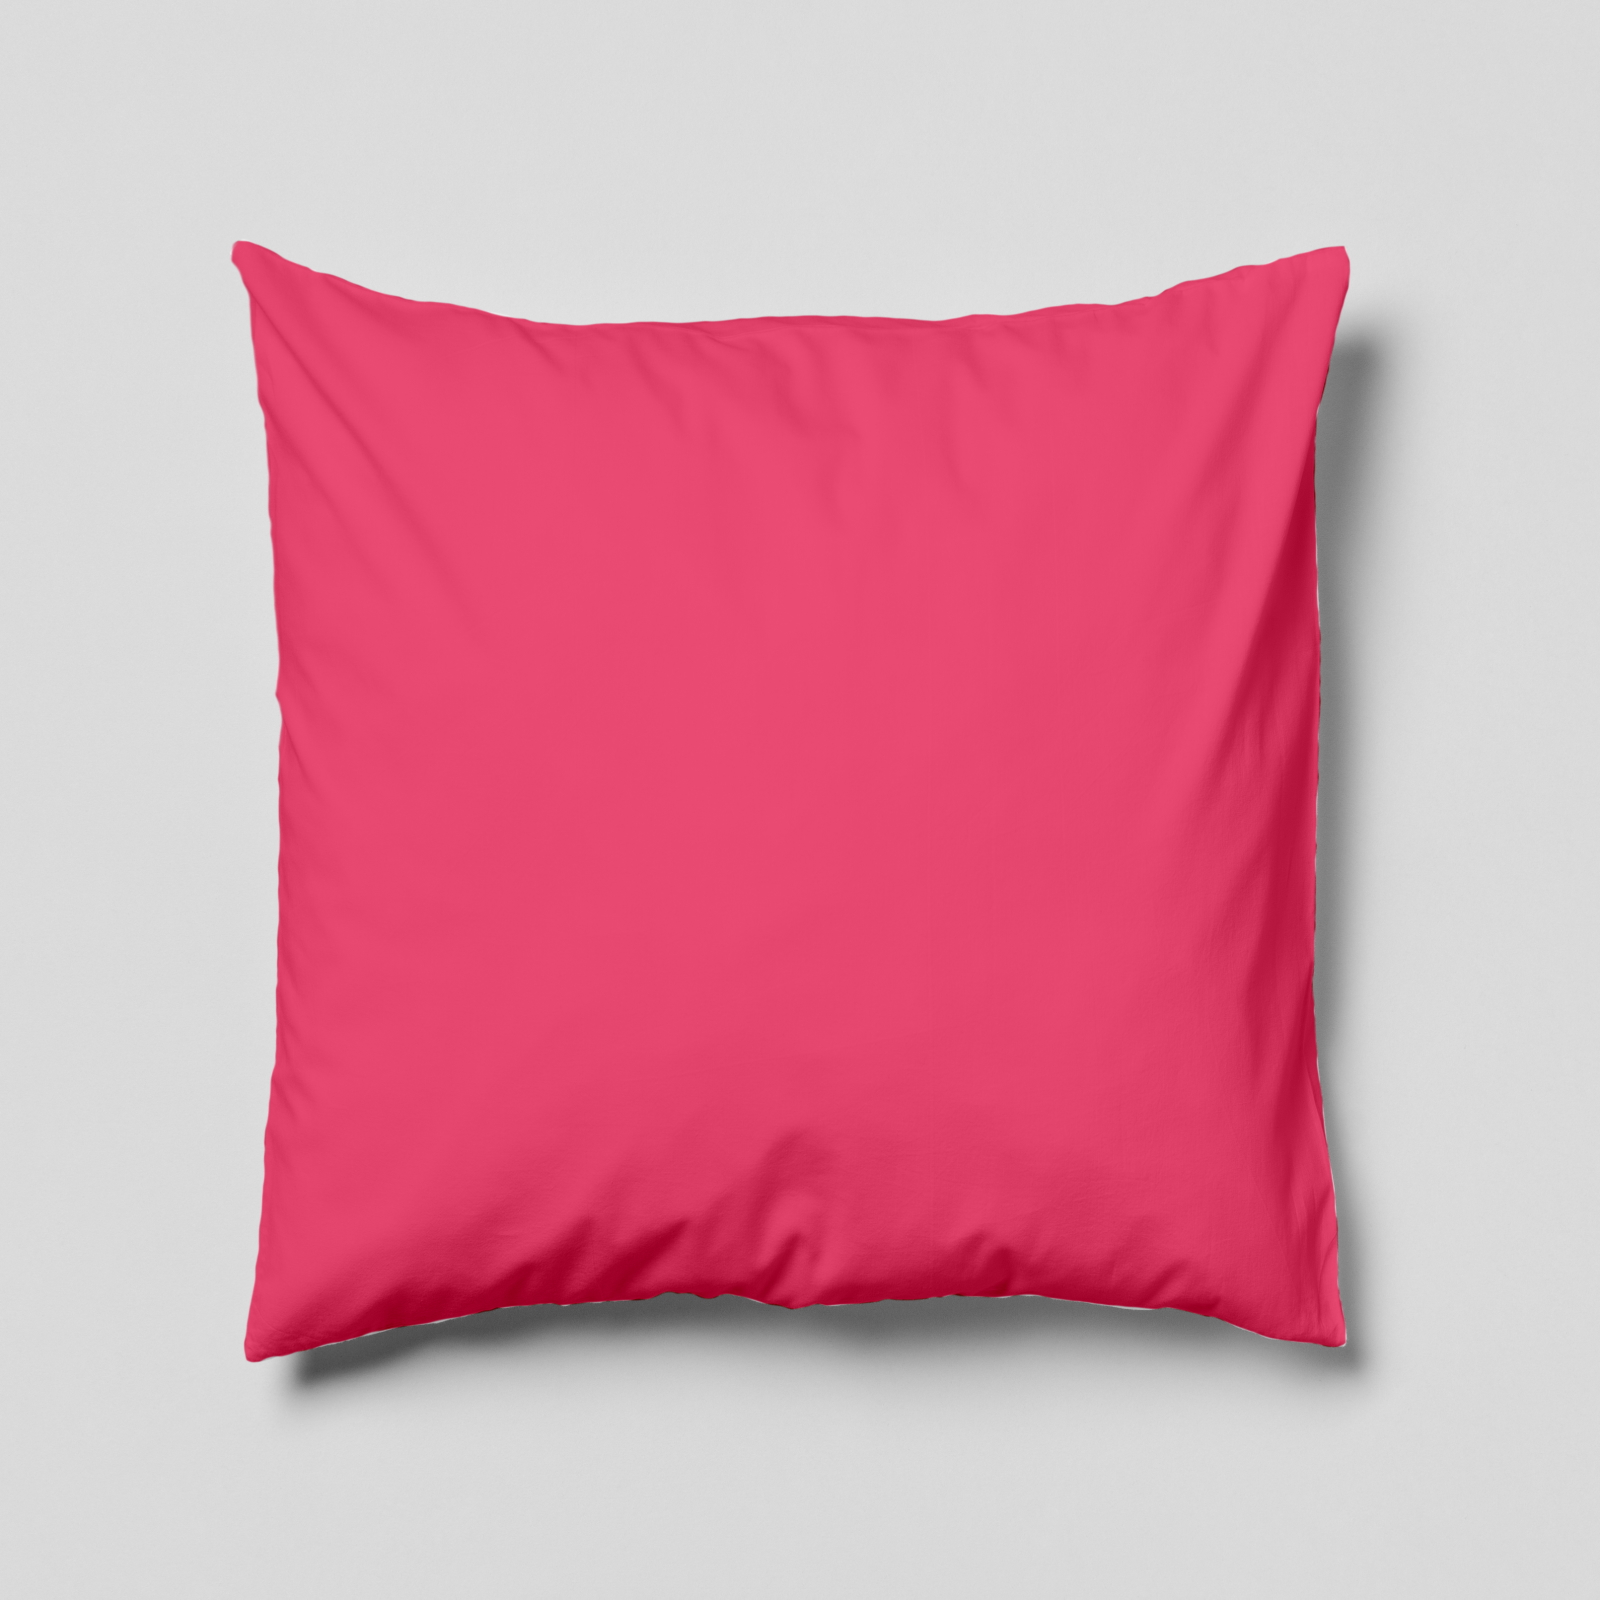 Komplettkissen Polyester-Pink / 50x50 cm